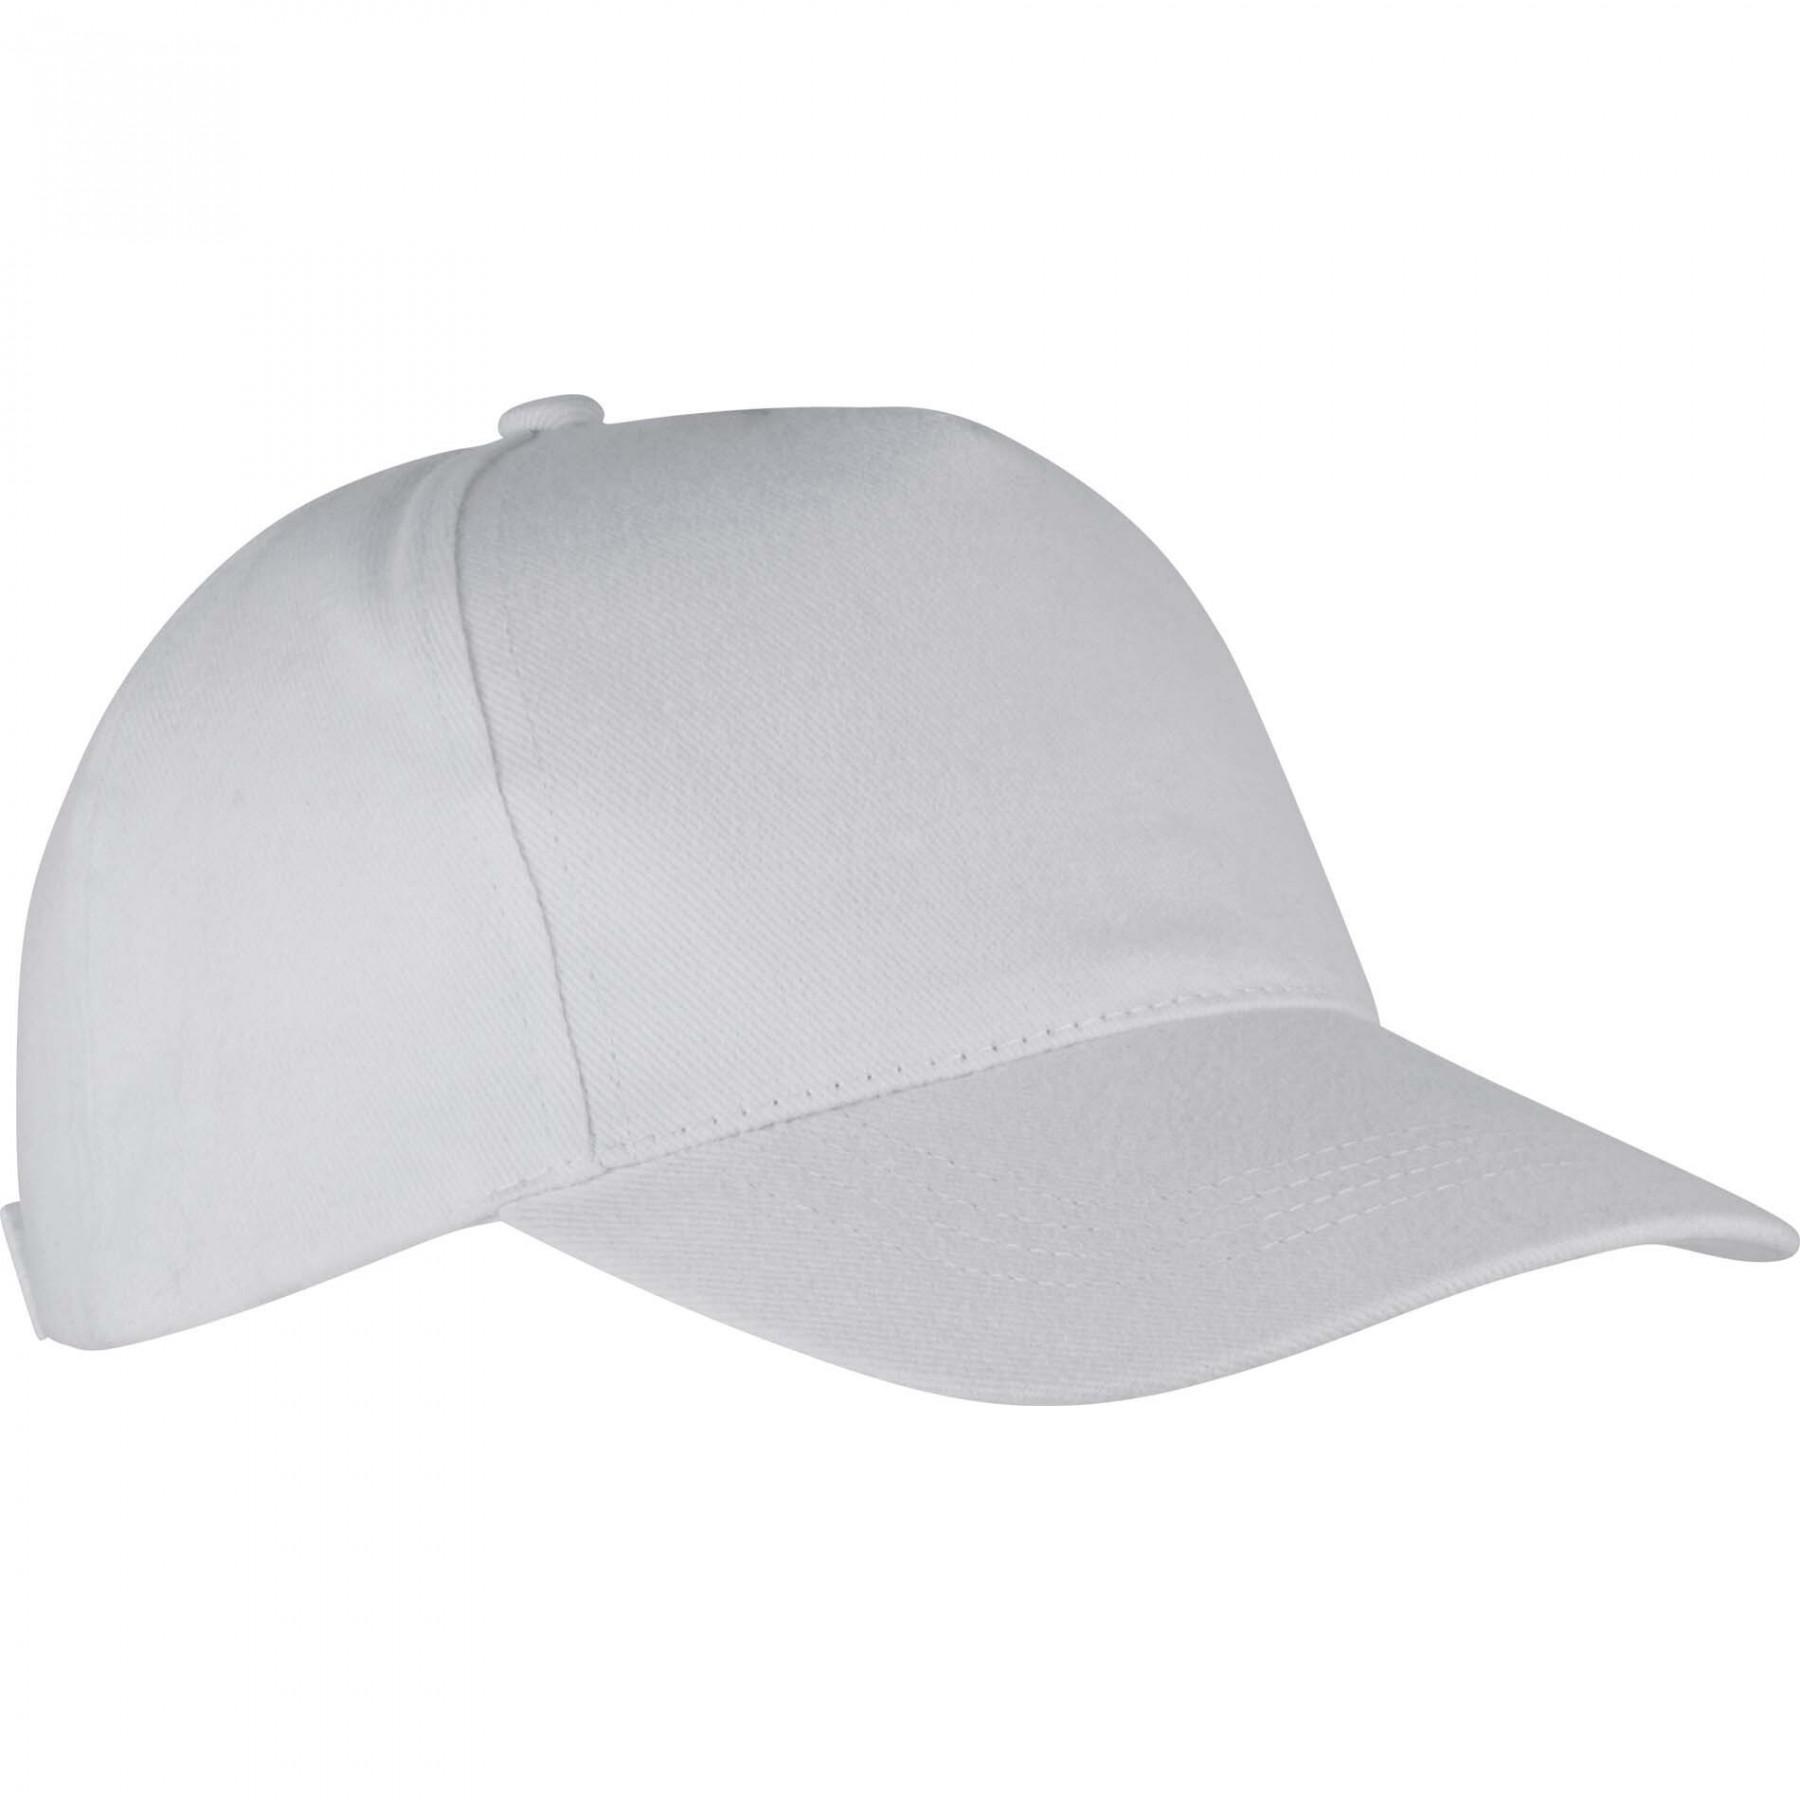 Regulowana czapka K-up 5 Panneaux